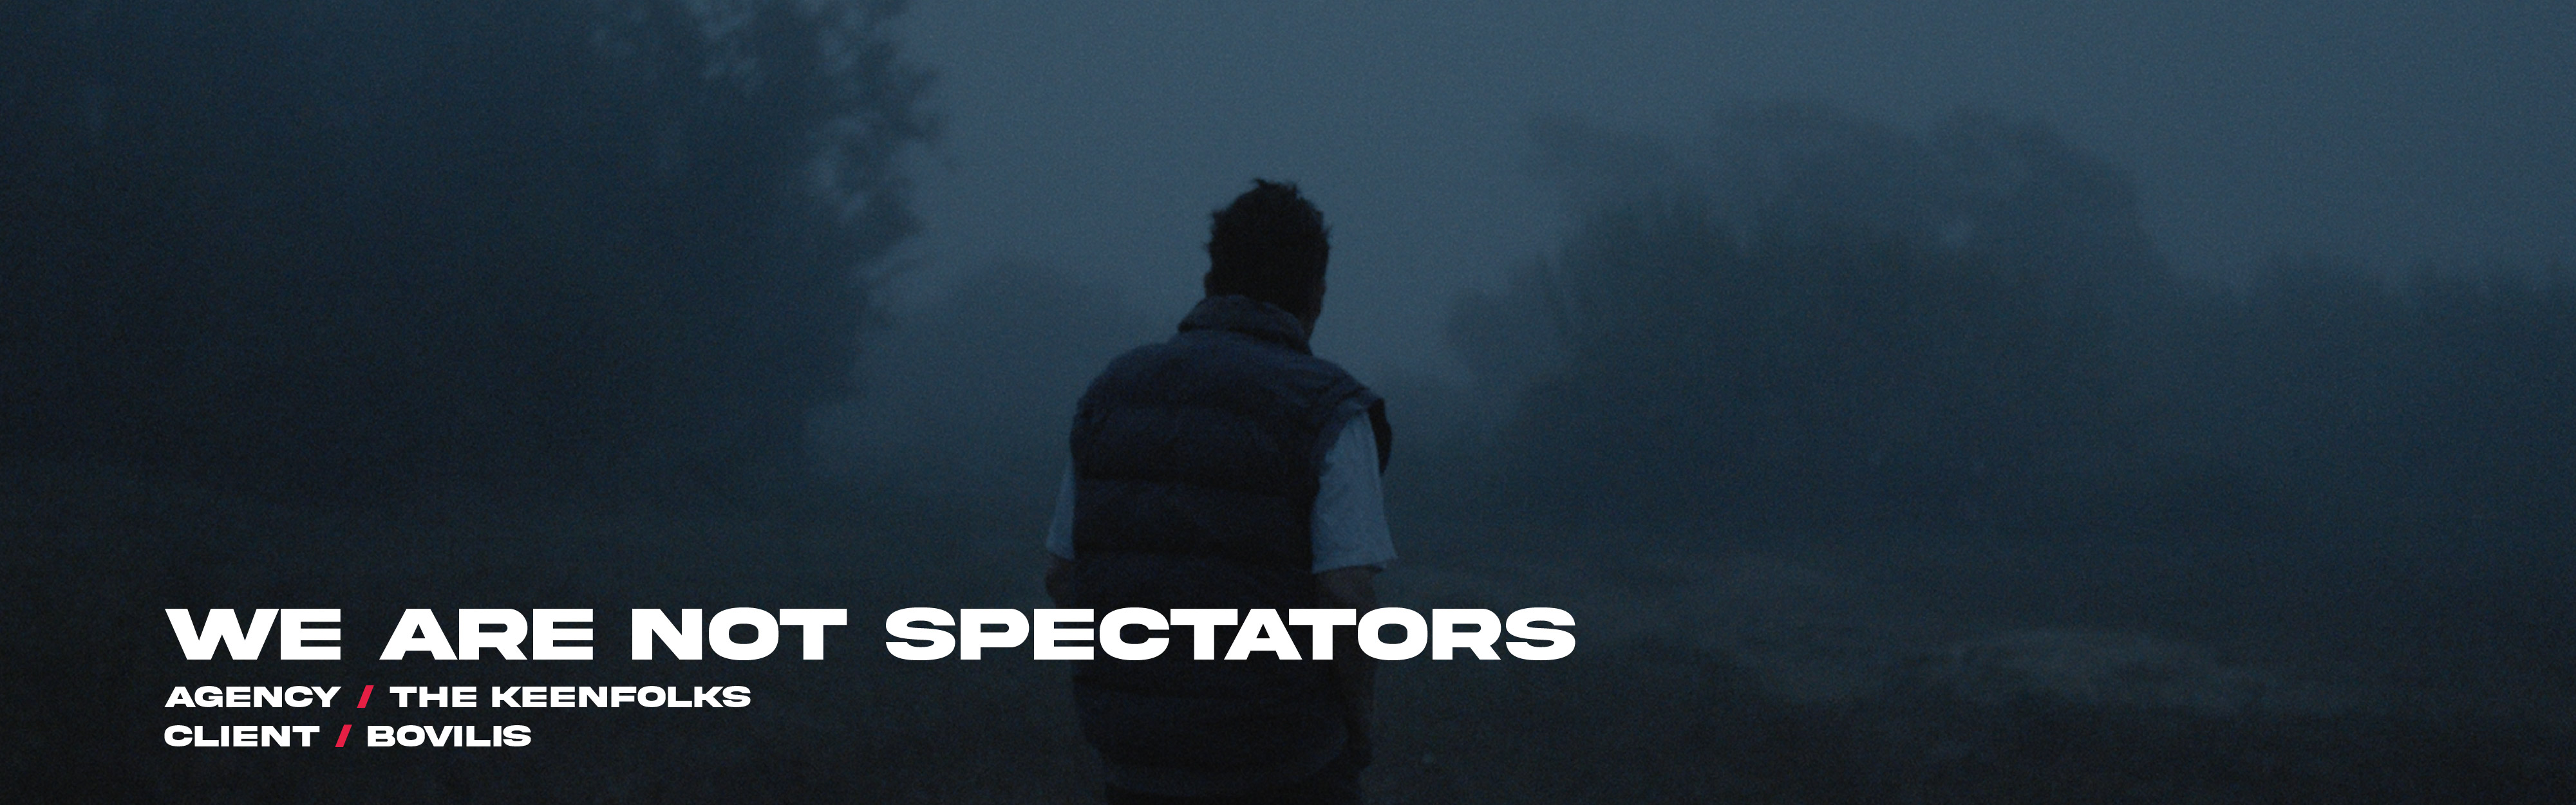 We are not spectators